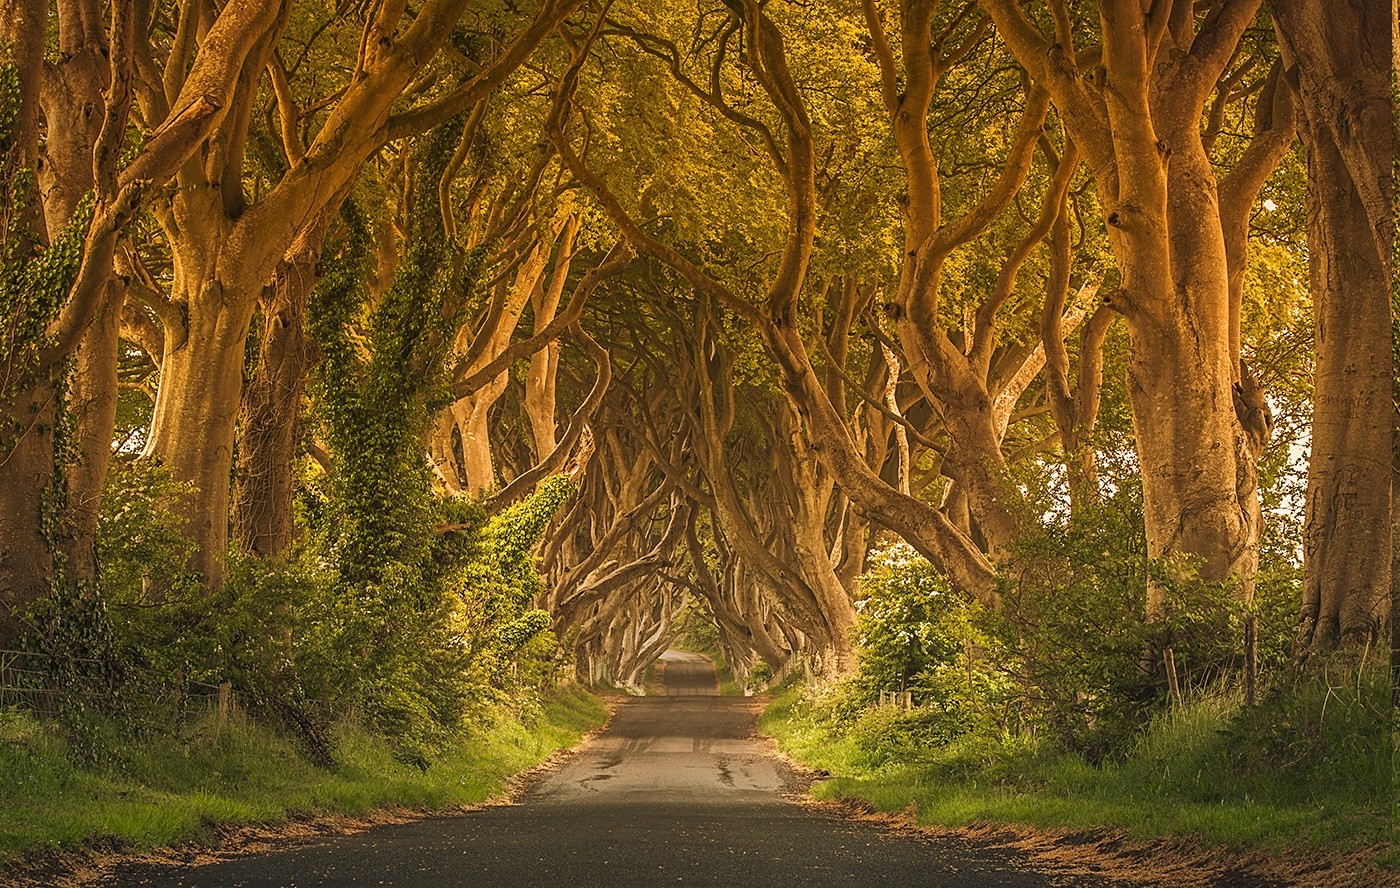 Ireland, Trees, Green, Road, Grass, Street, Fence, Shrubs, Summer, Nature, Landscape, Hedges Wallpaper